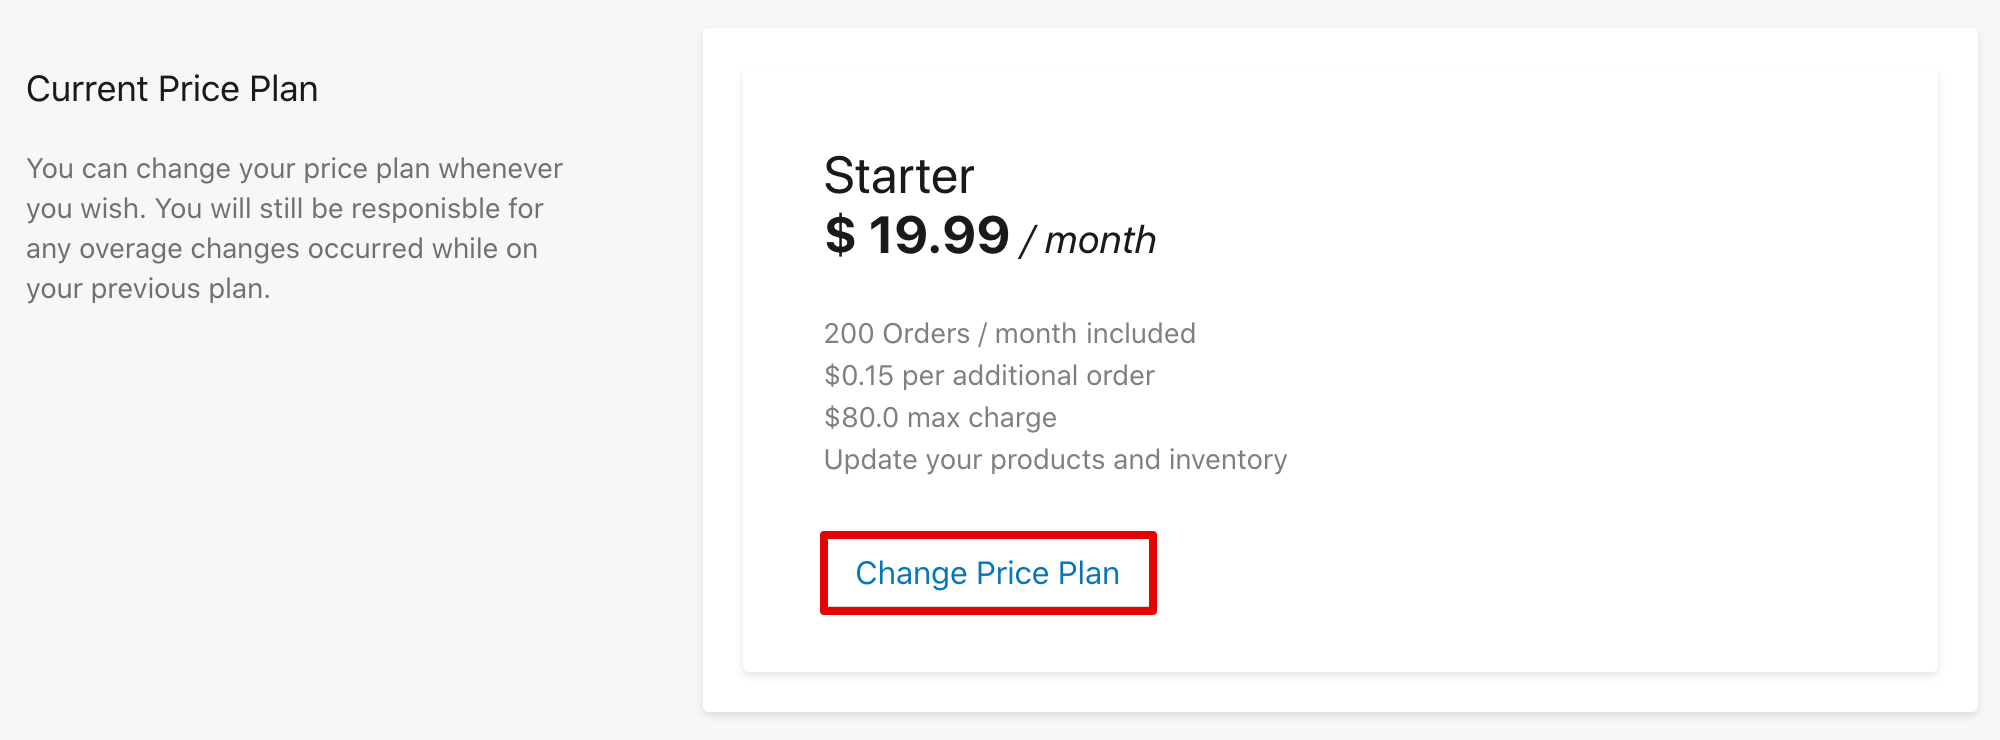 Select Change Price Plan